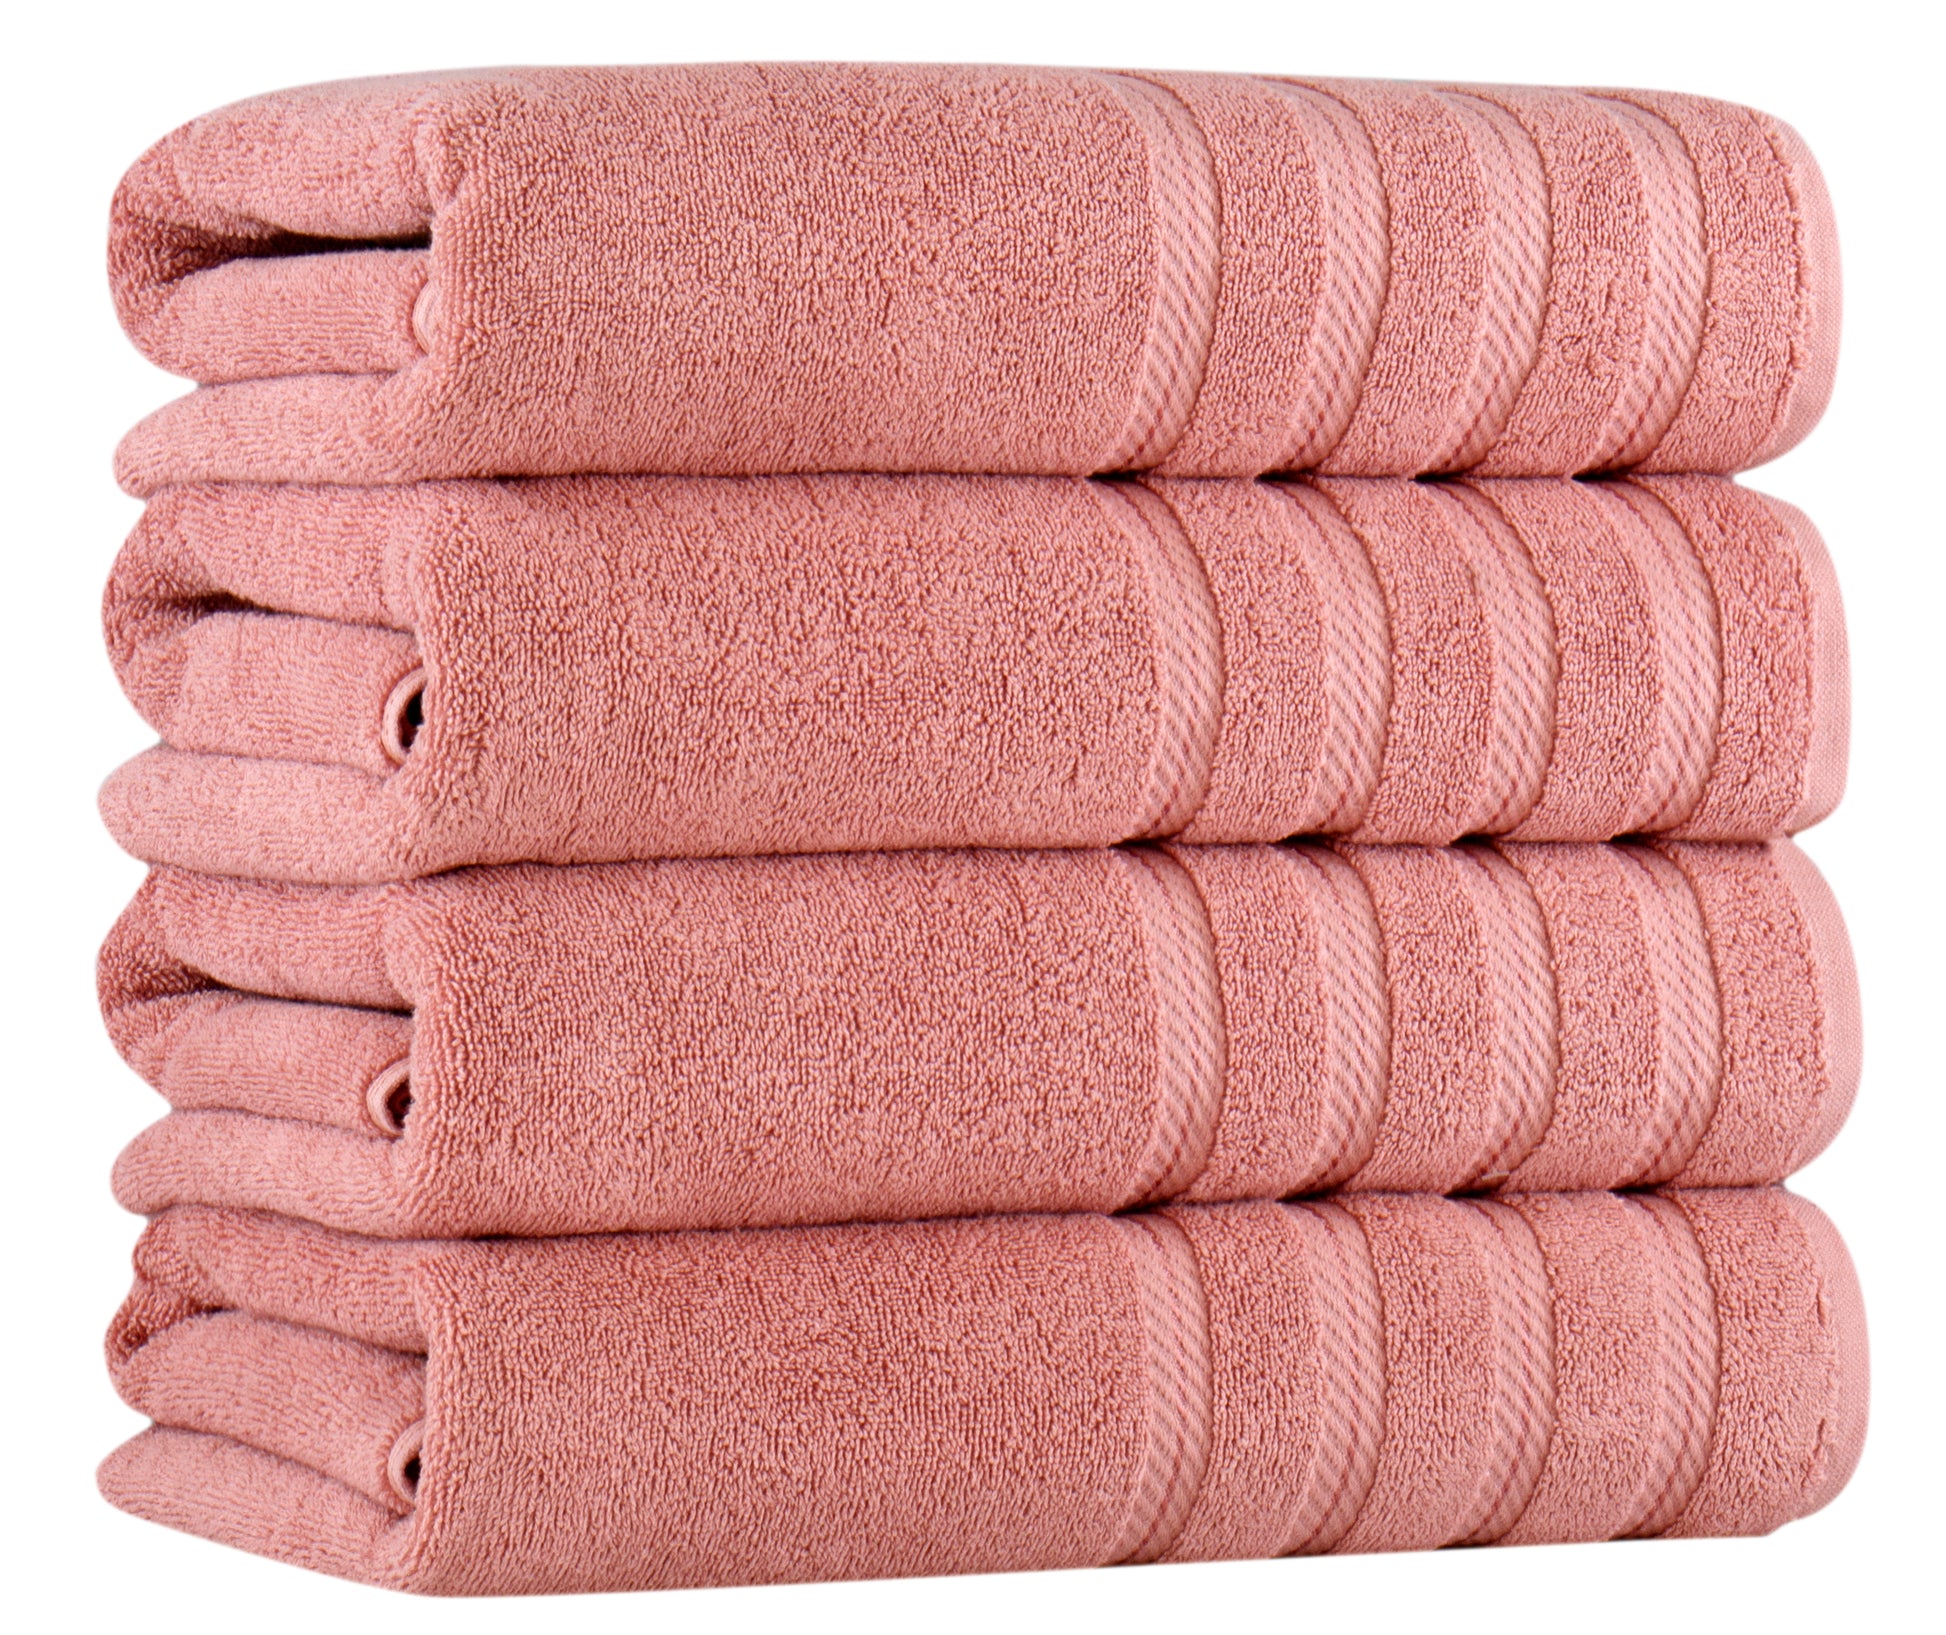 Luxury Hotels Spa Cotton Bath Towels